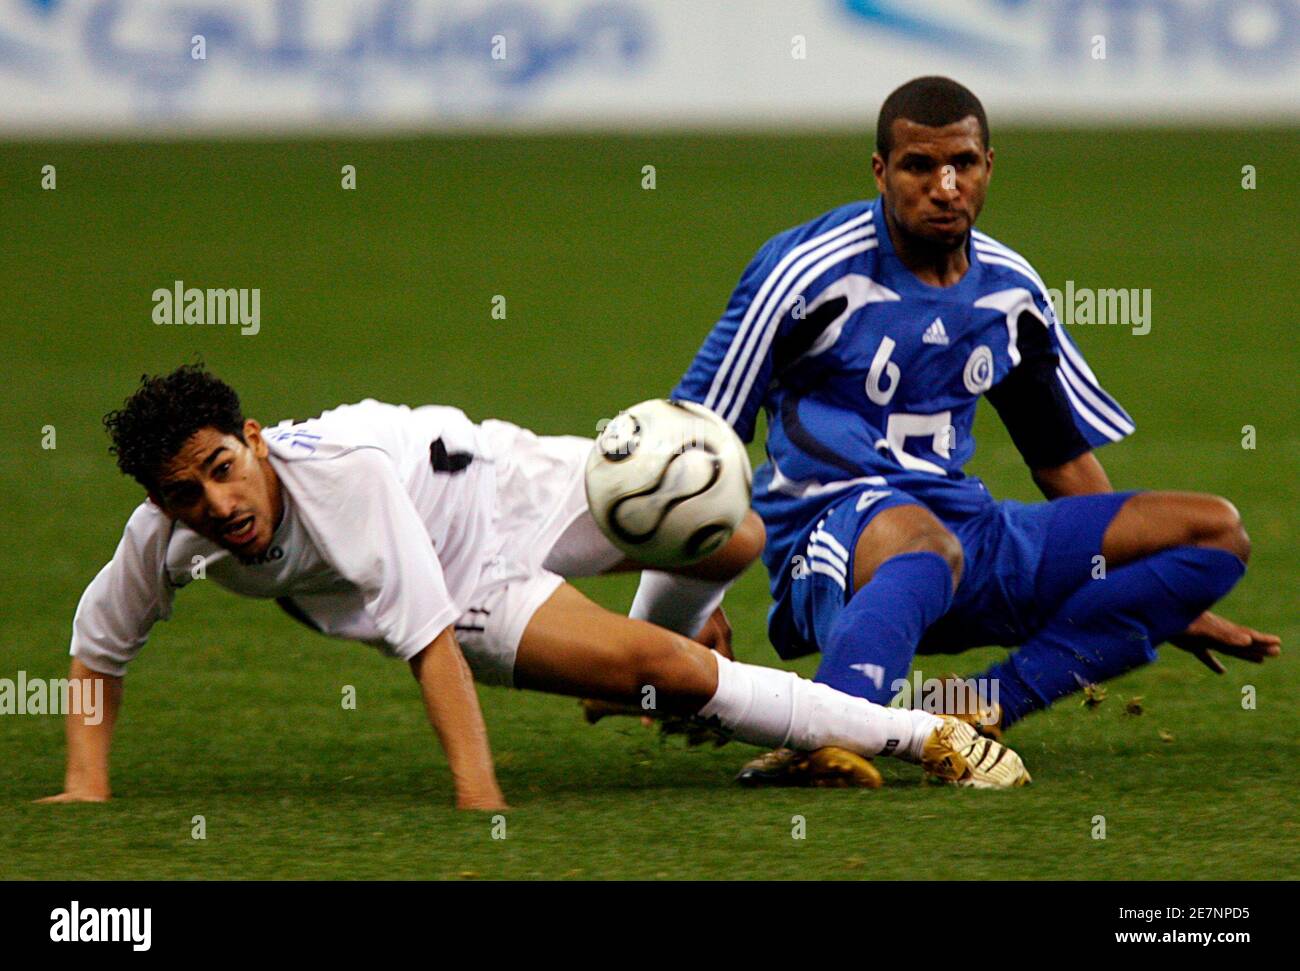 Khaled Al Zakar (R) von Al Hilal kämpft mit Ahmed Oteef von Al Shabab während des Qualifikationsspiels zum Saudi Crown Prince Cup in Riad am 1. März 2008 um den Ball. REUTERS/Fahad Shadeed (SAUDI-ARABIEN) Stockfoto